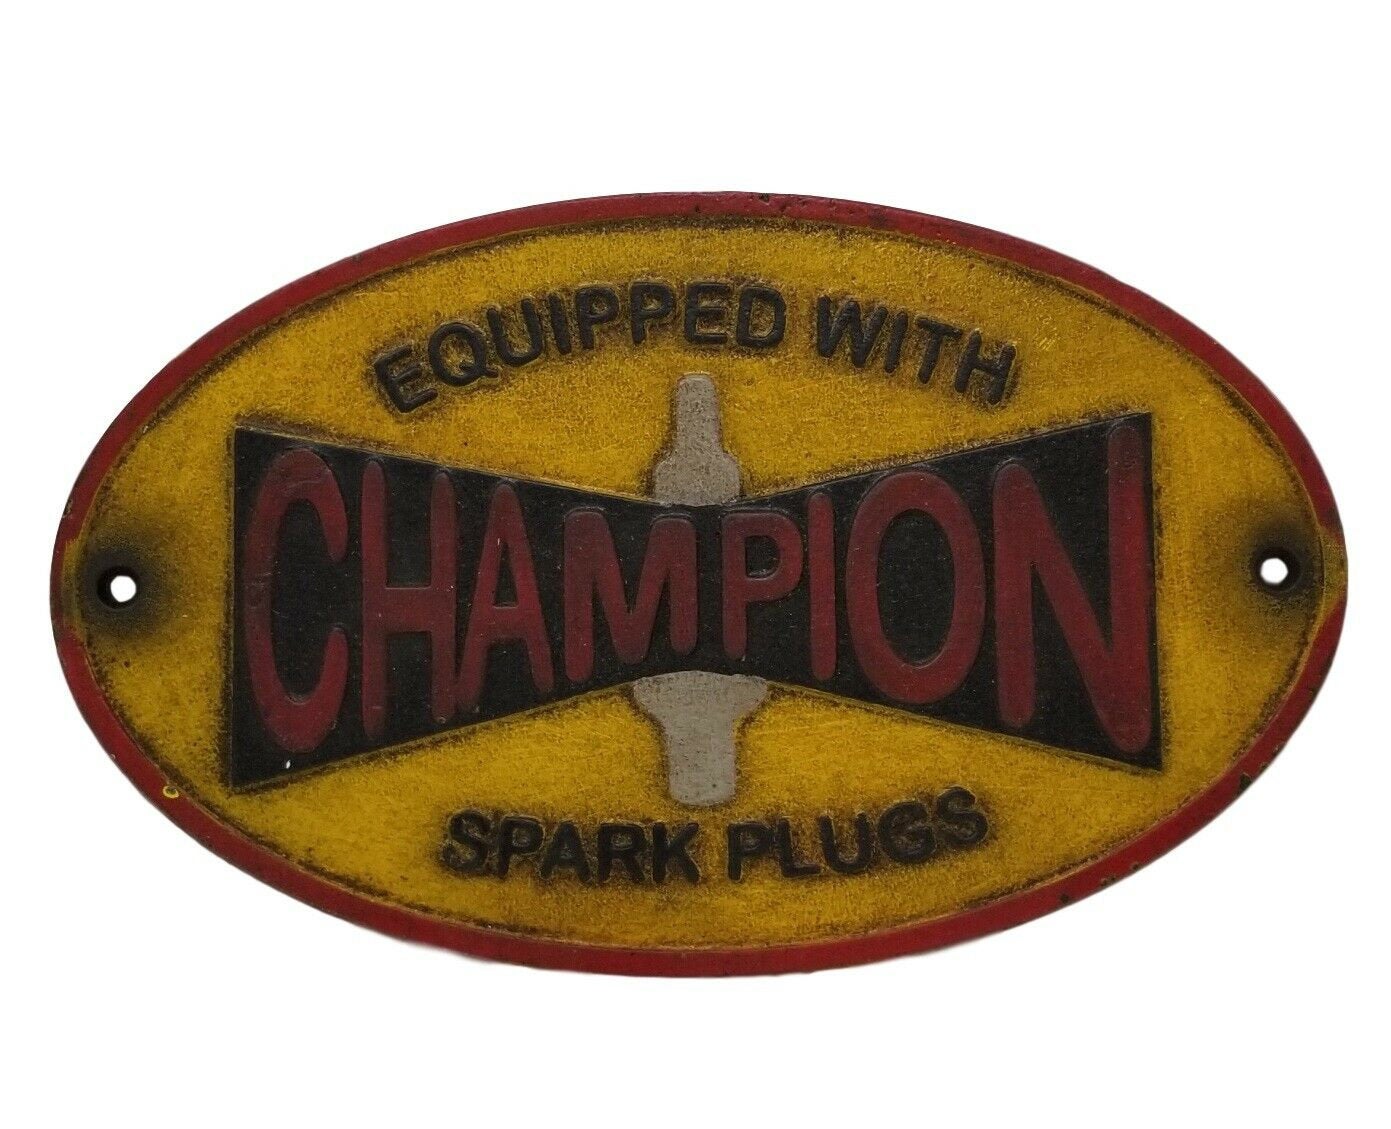 Champion Spark Plugs Cast Iron Wall Plaque